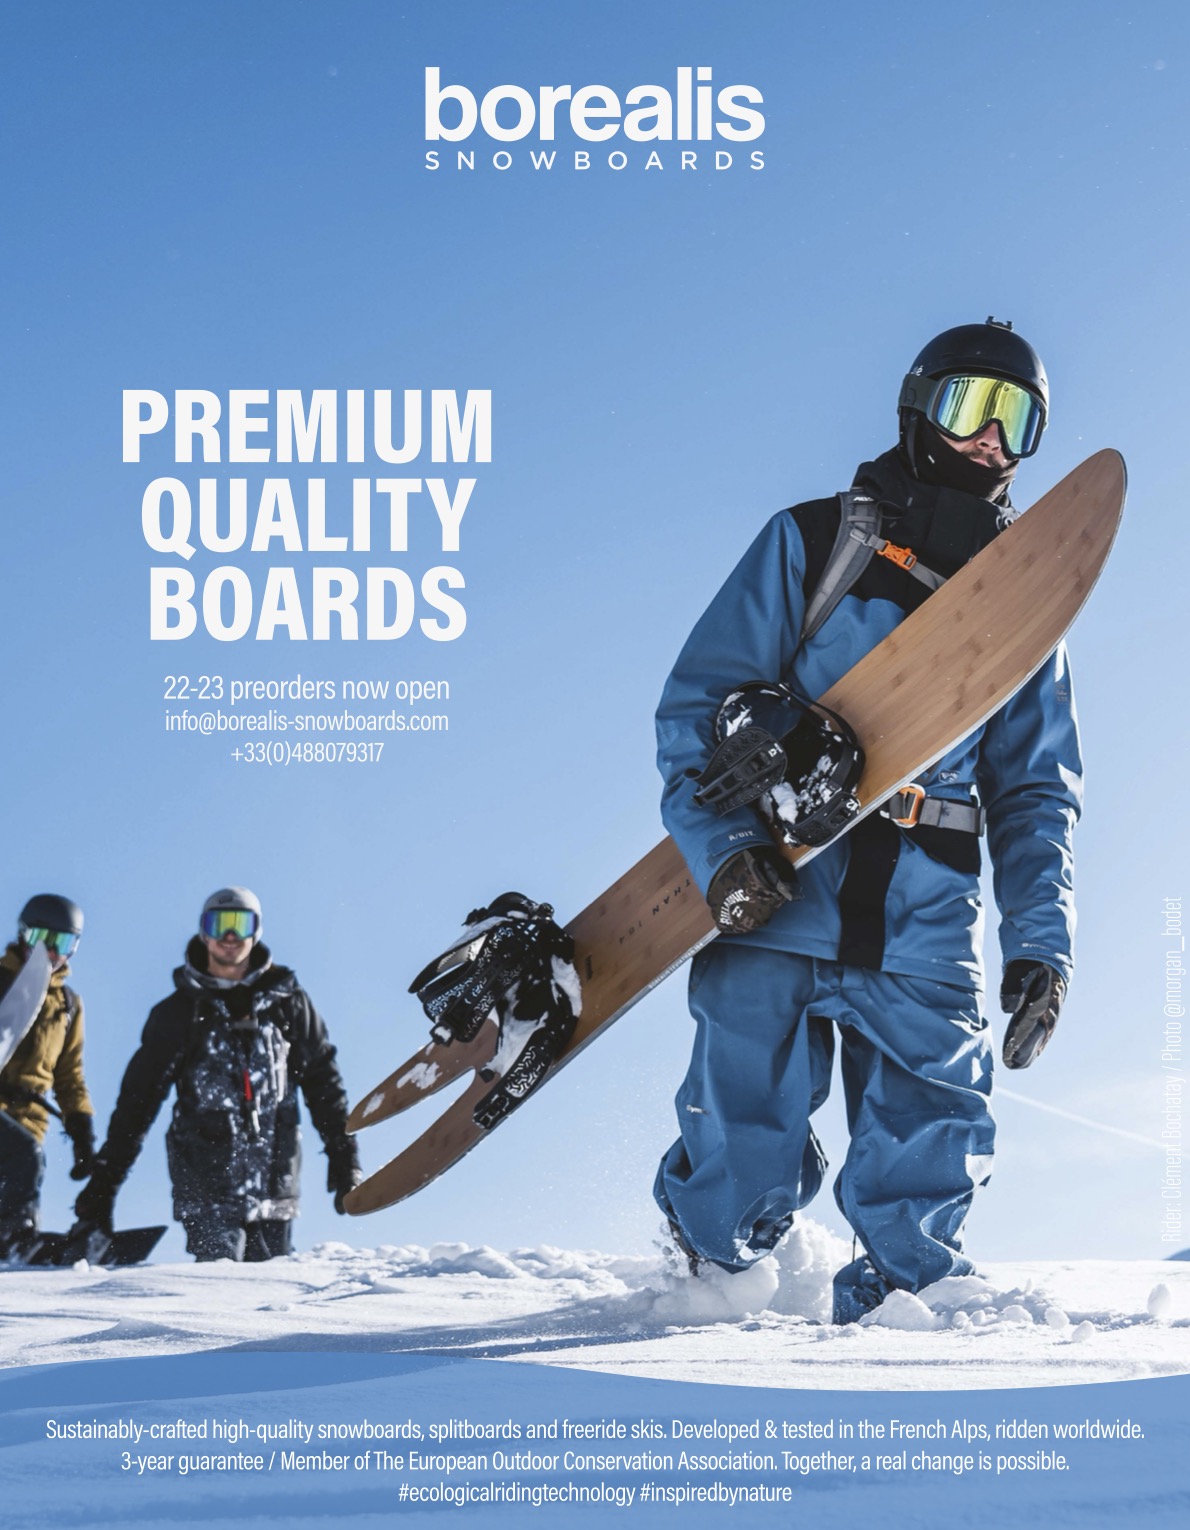 110 Borealis snowboards